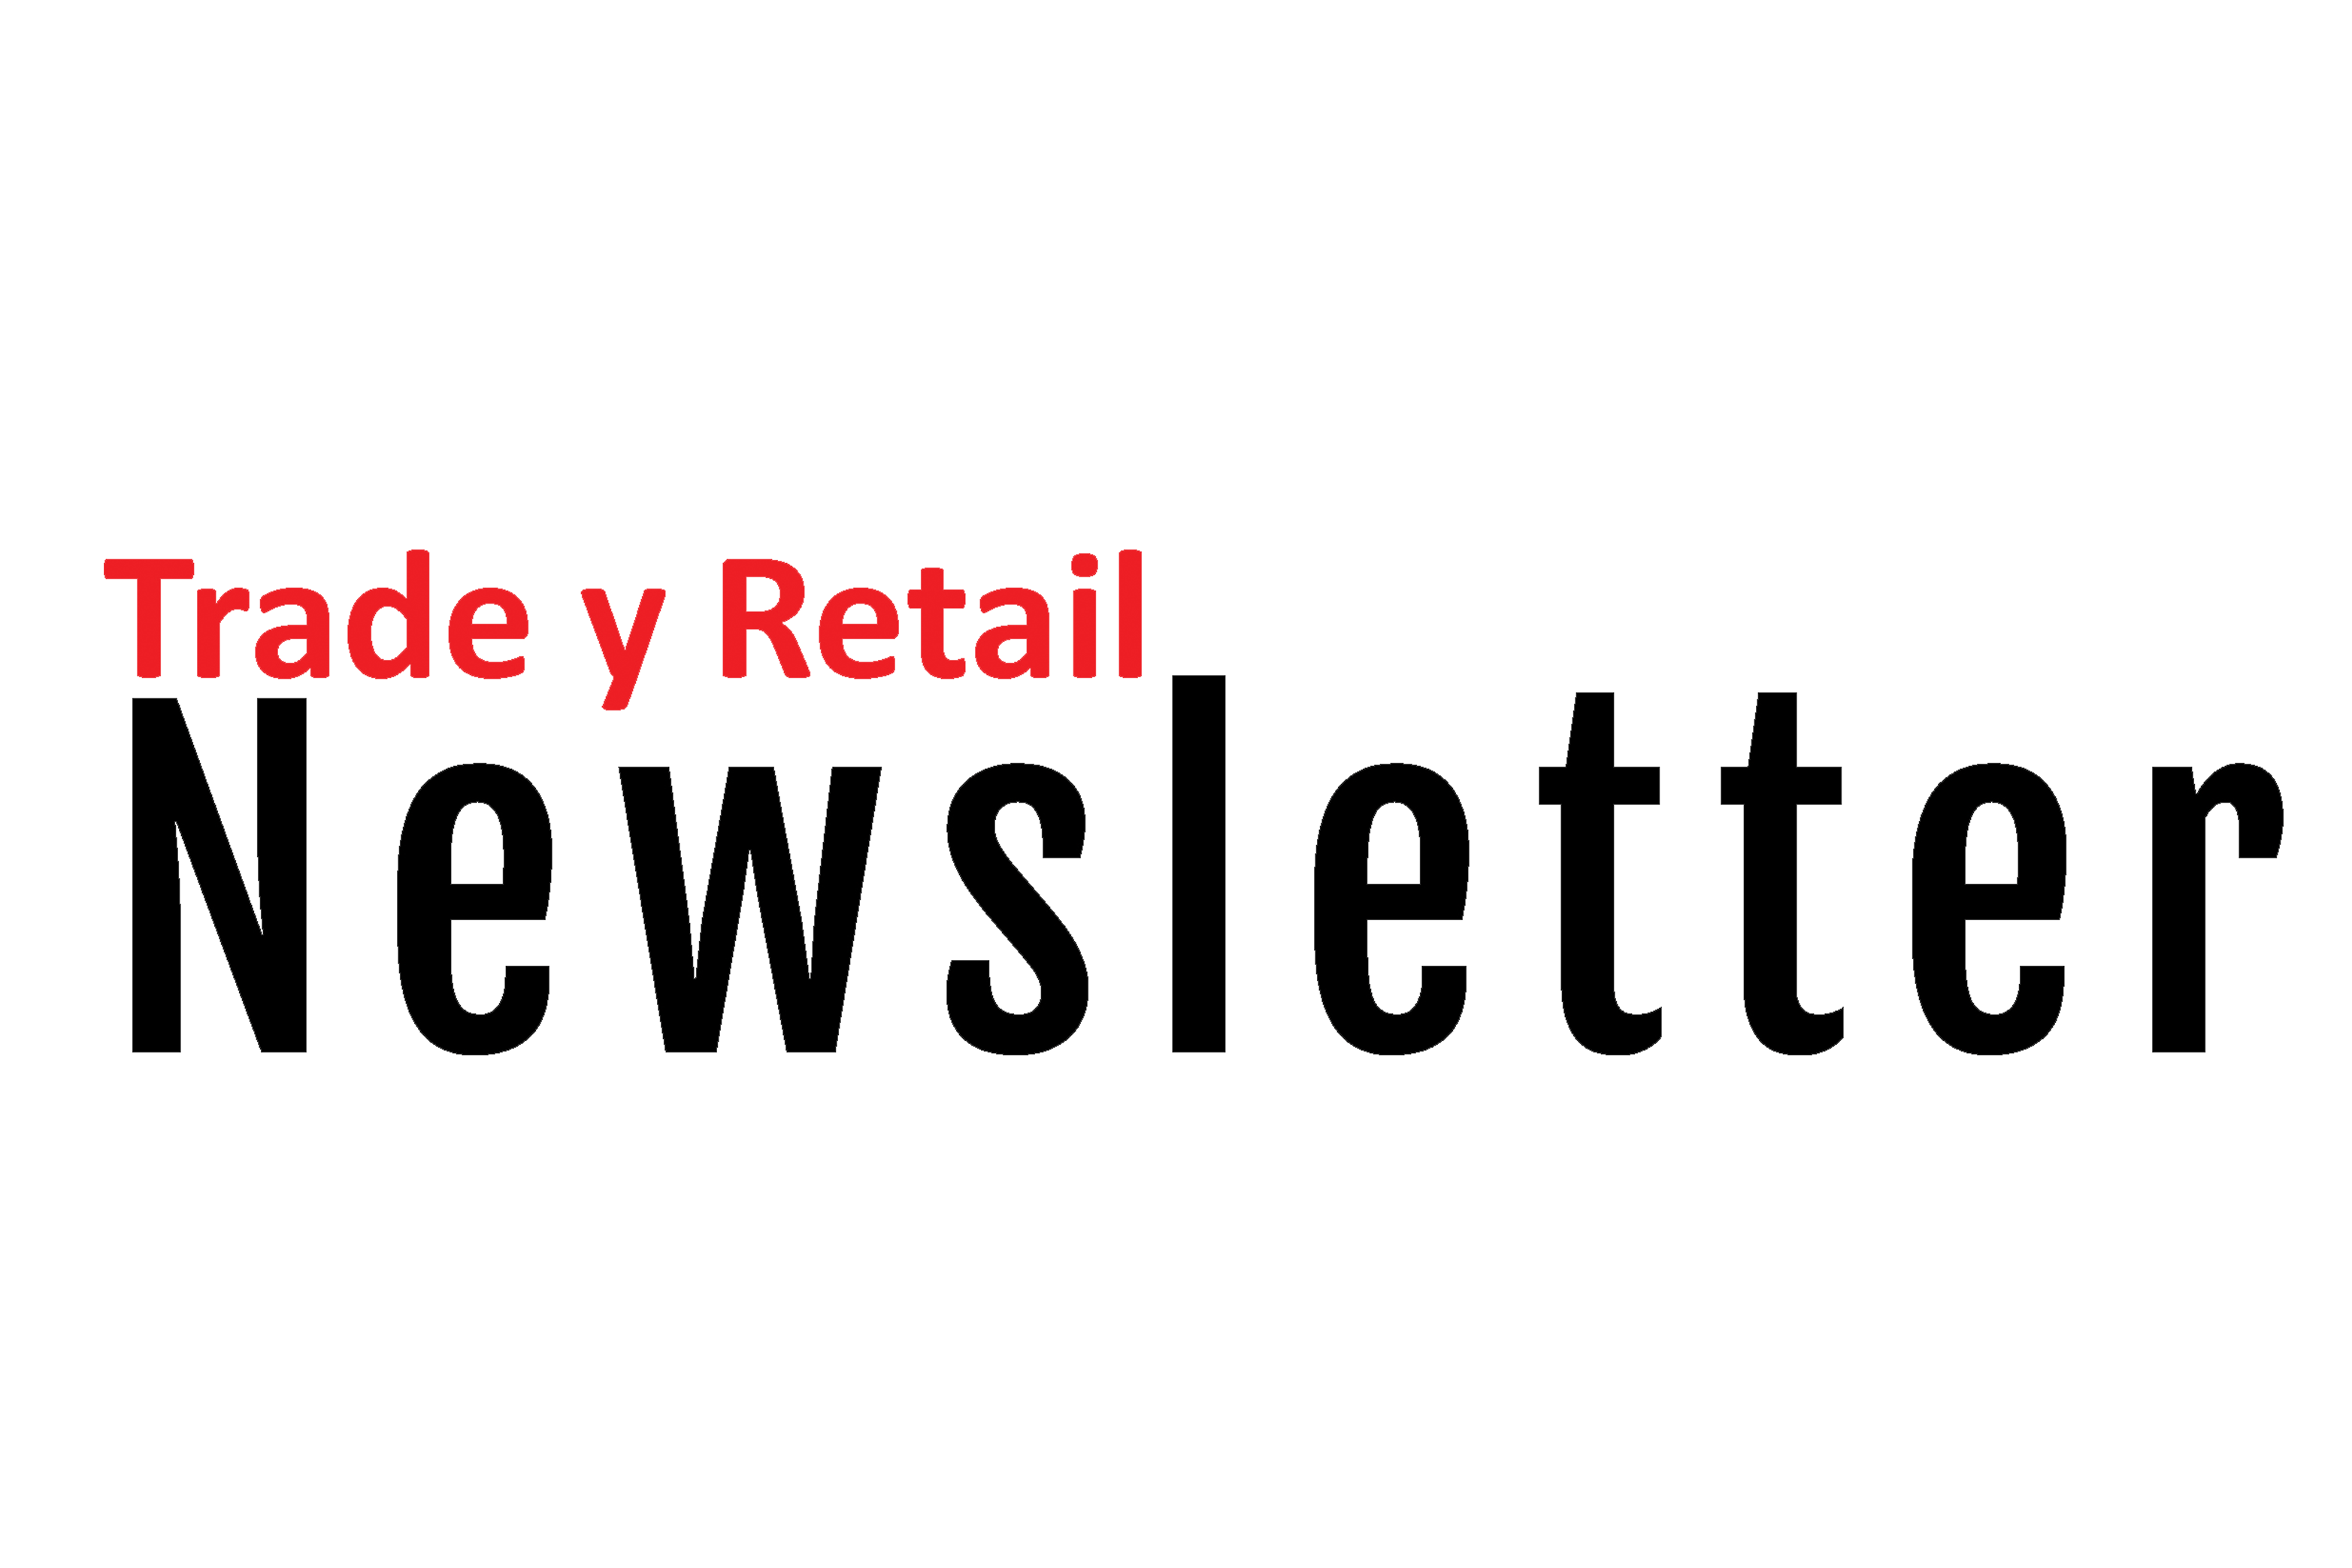 trade y retail newsletter